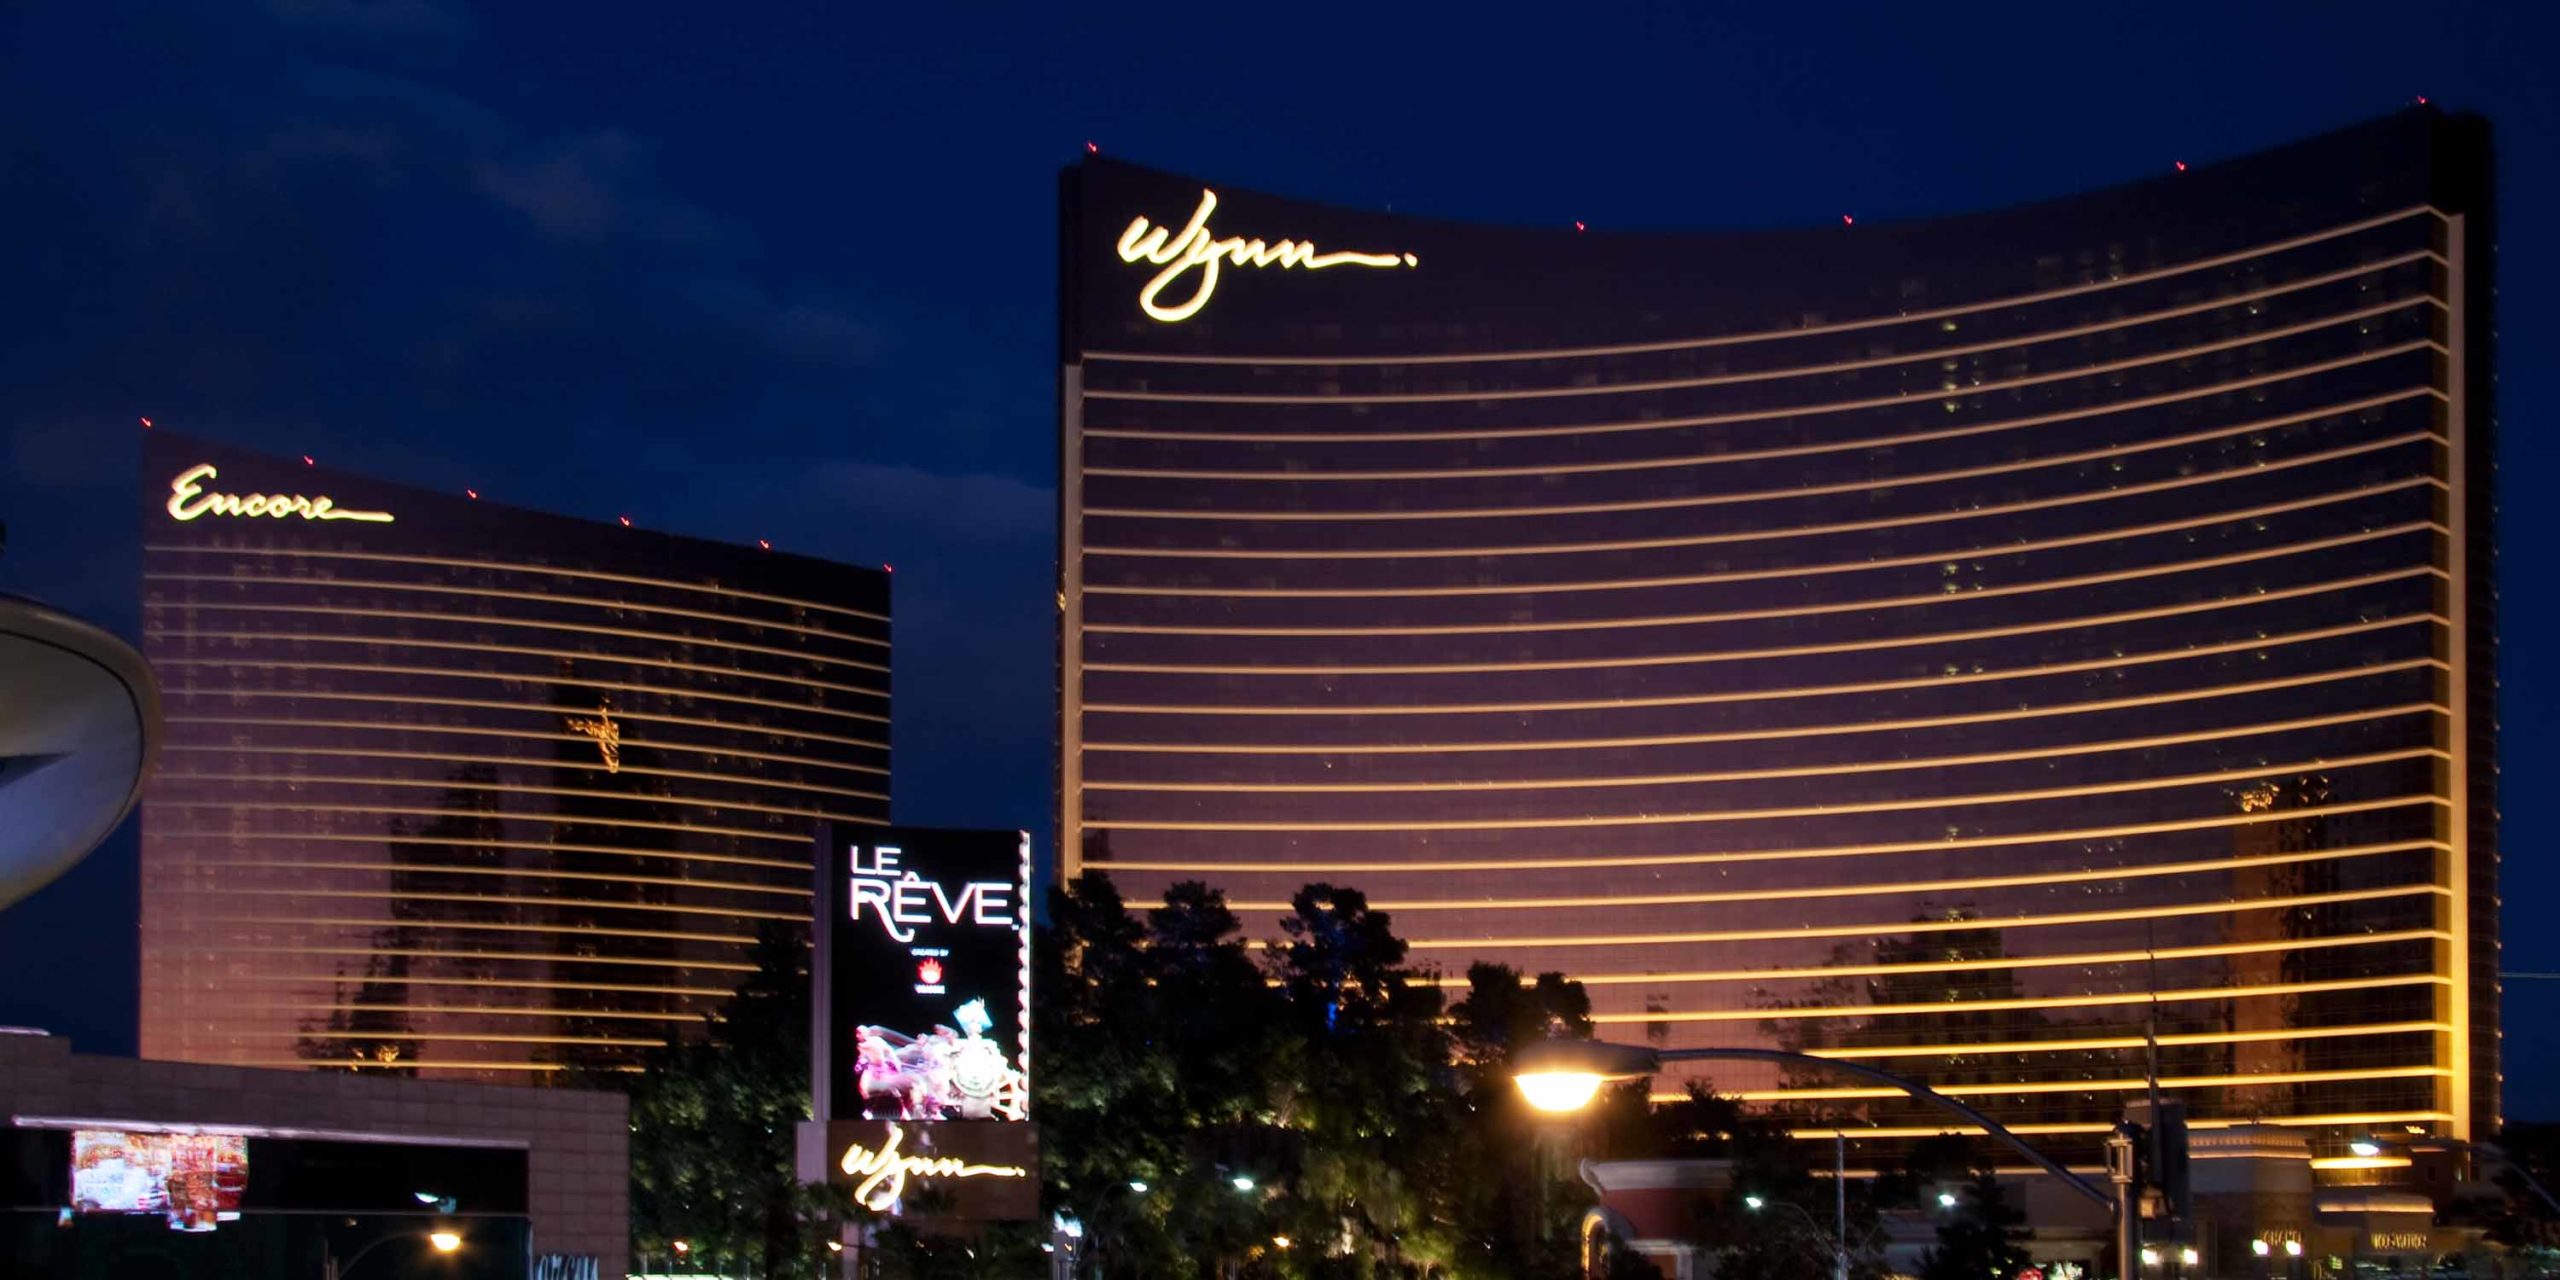 Wynn Las Vegas header image #4